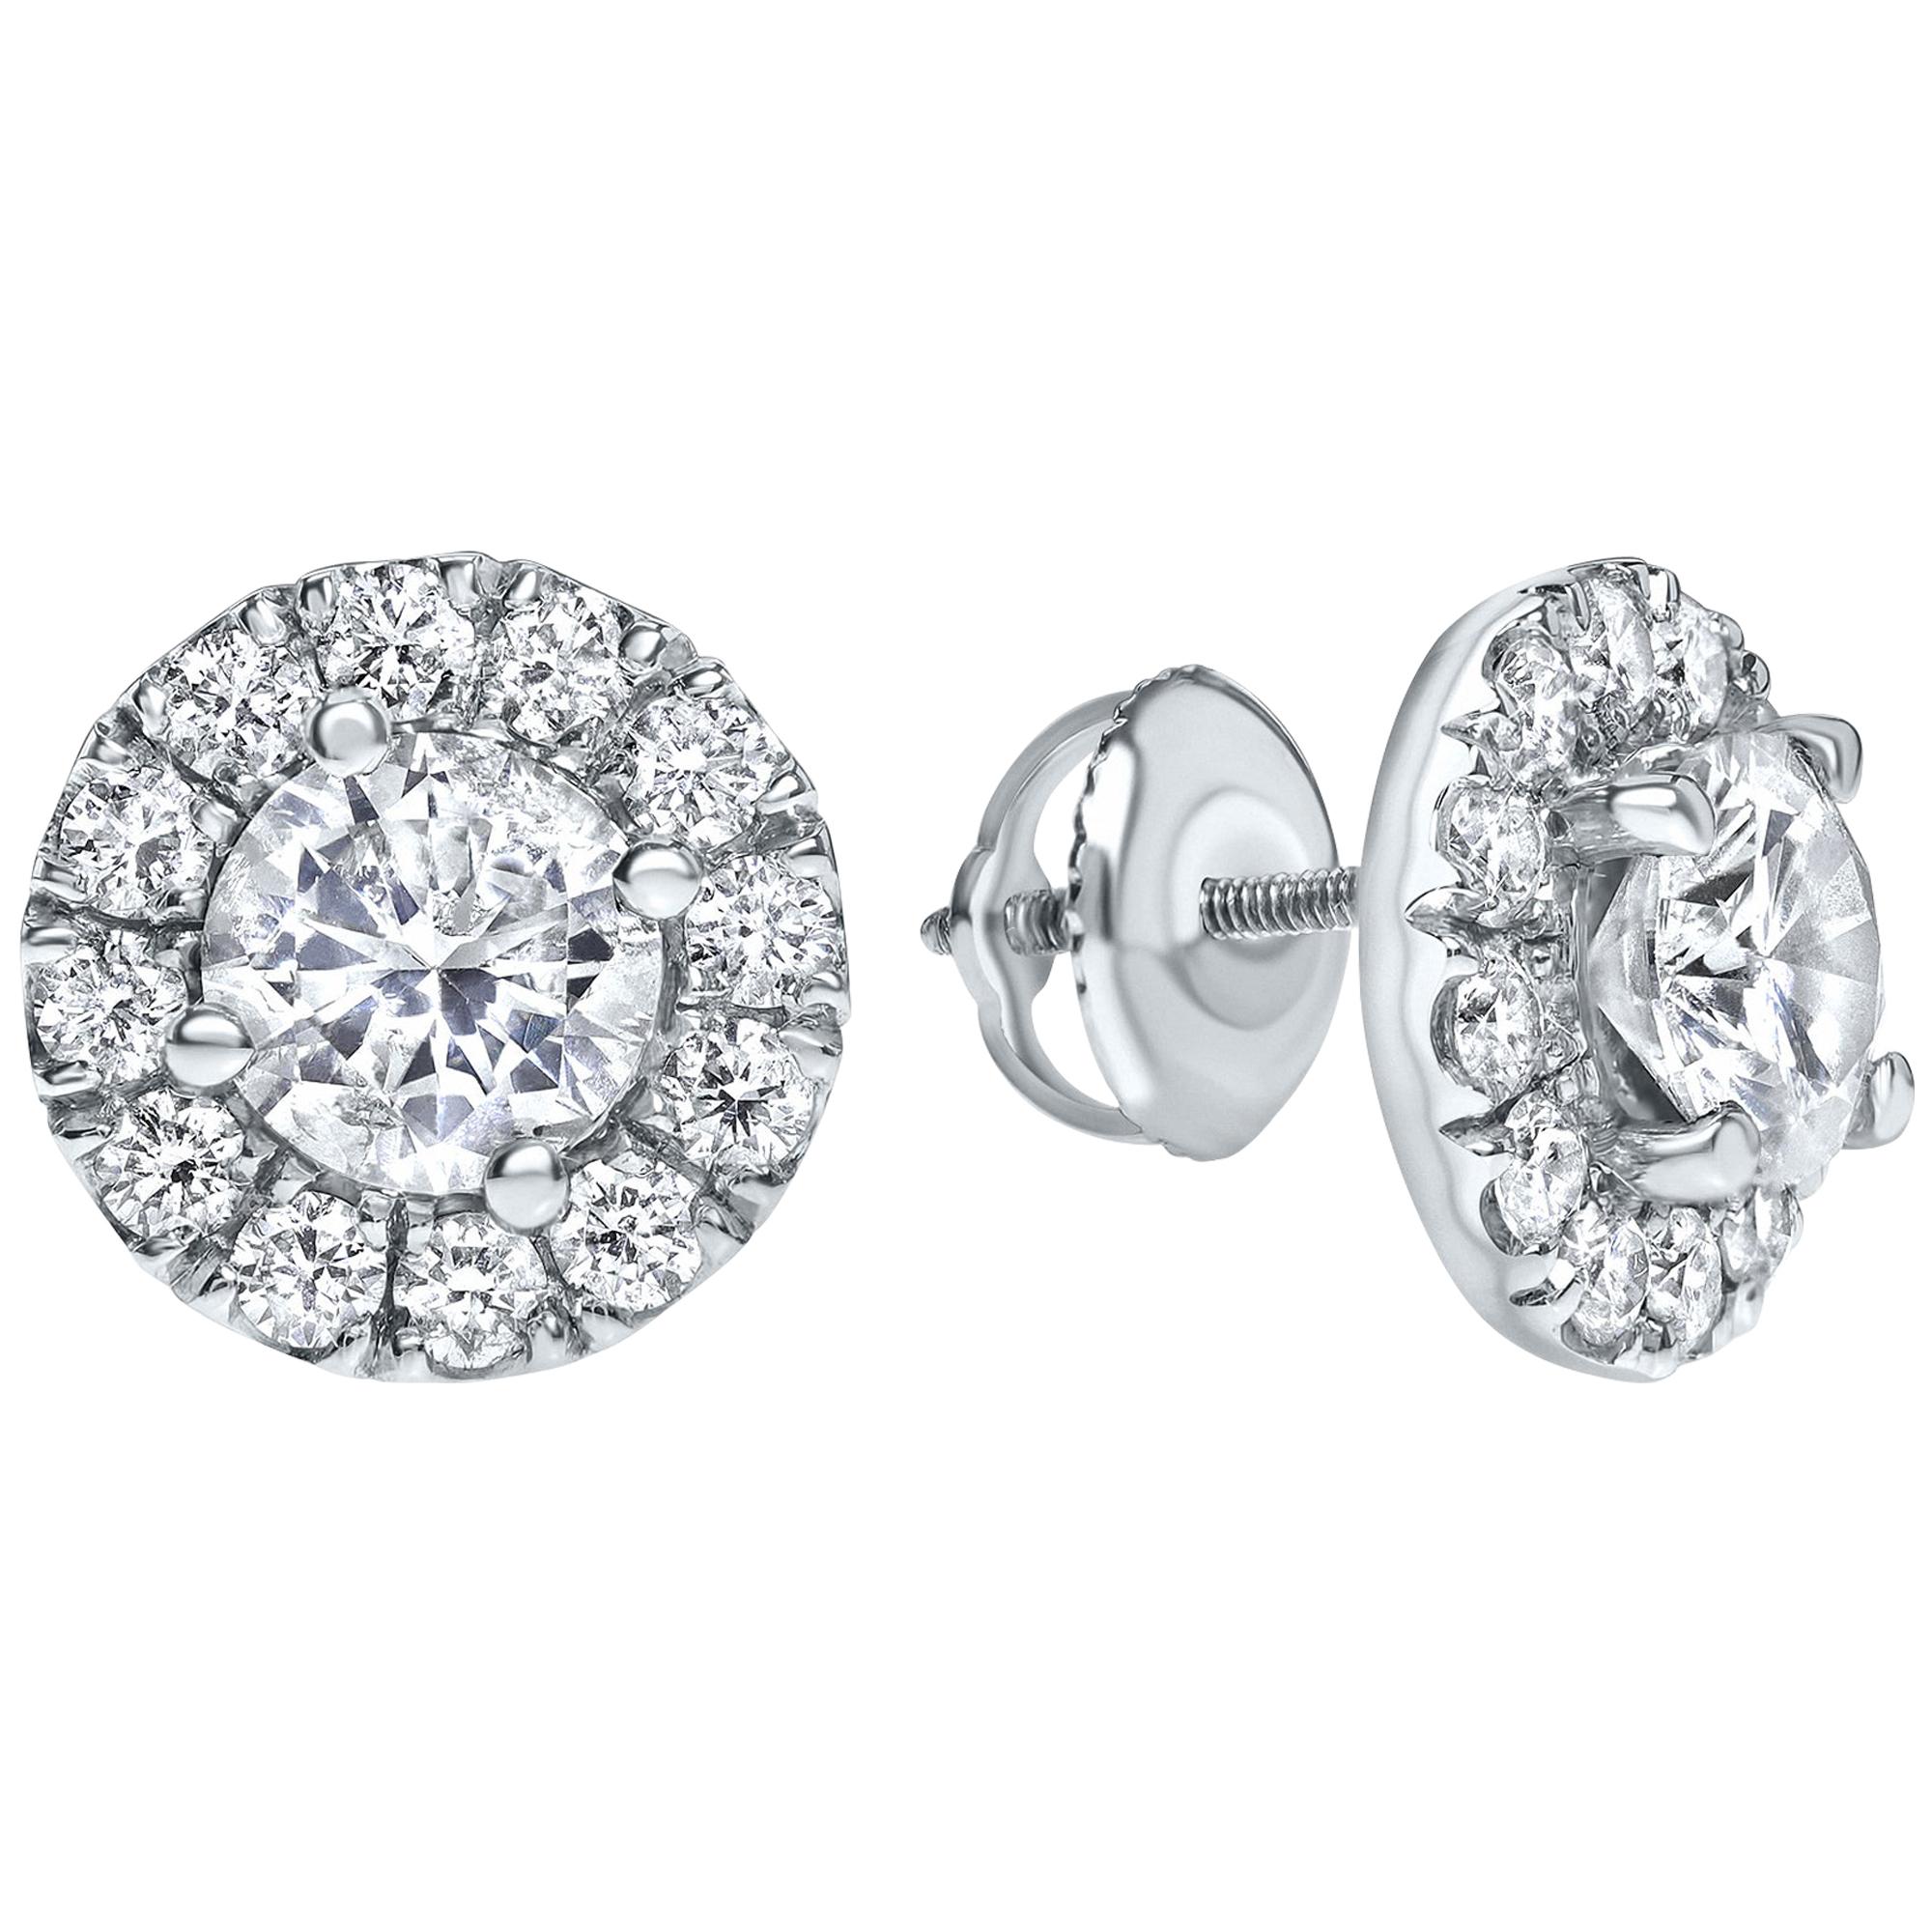 2.00 Carat Diamond Halo Earrings in 14 Karat White Gold - Shlomit Rogel For Sale